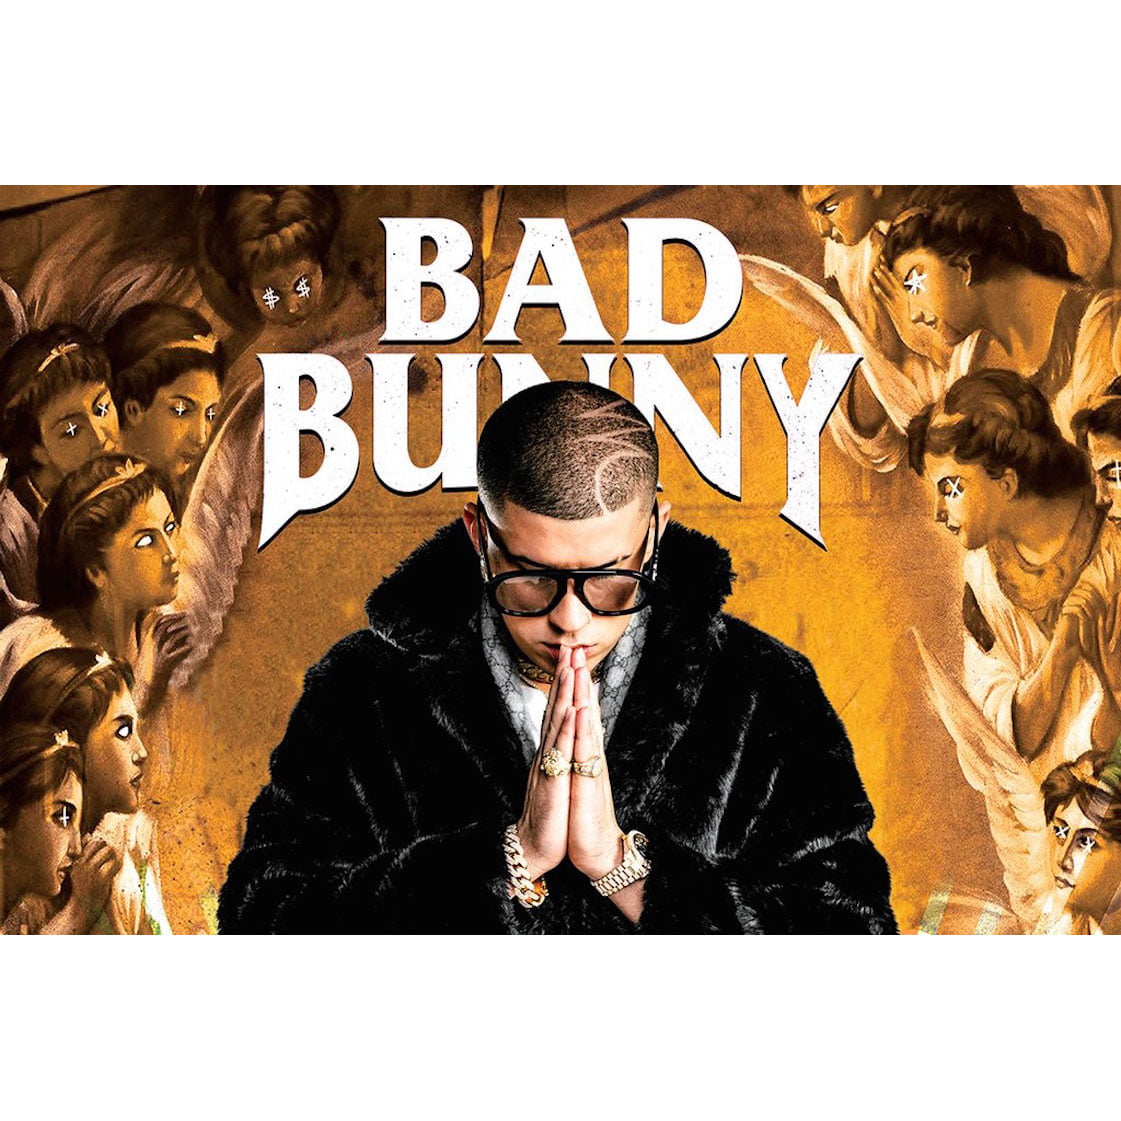 Bad Bunny Album Covers Wallpapers